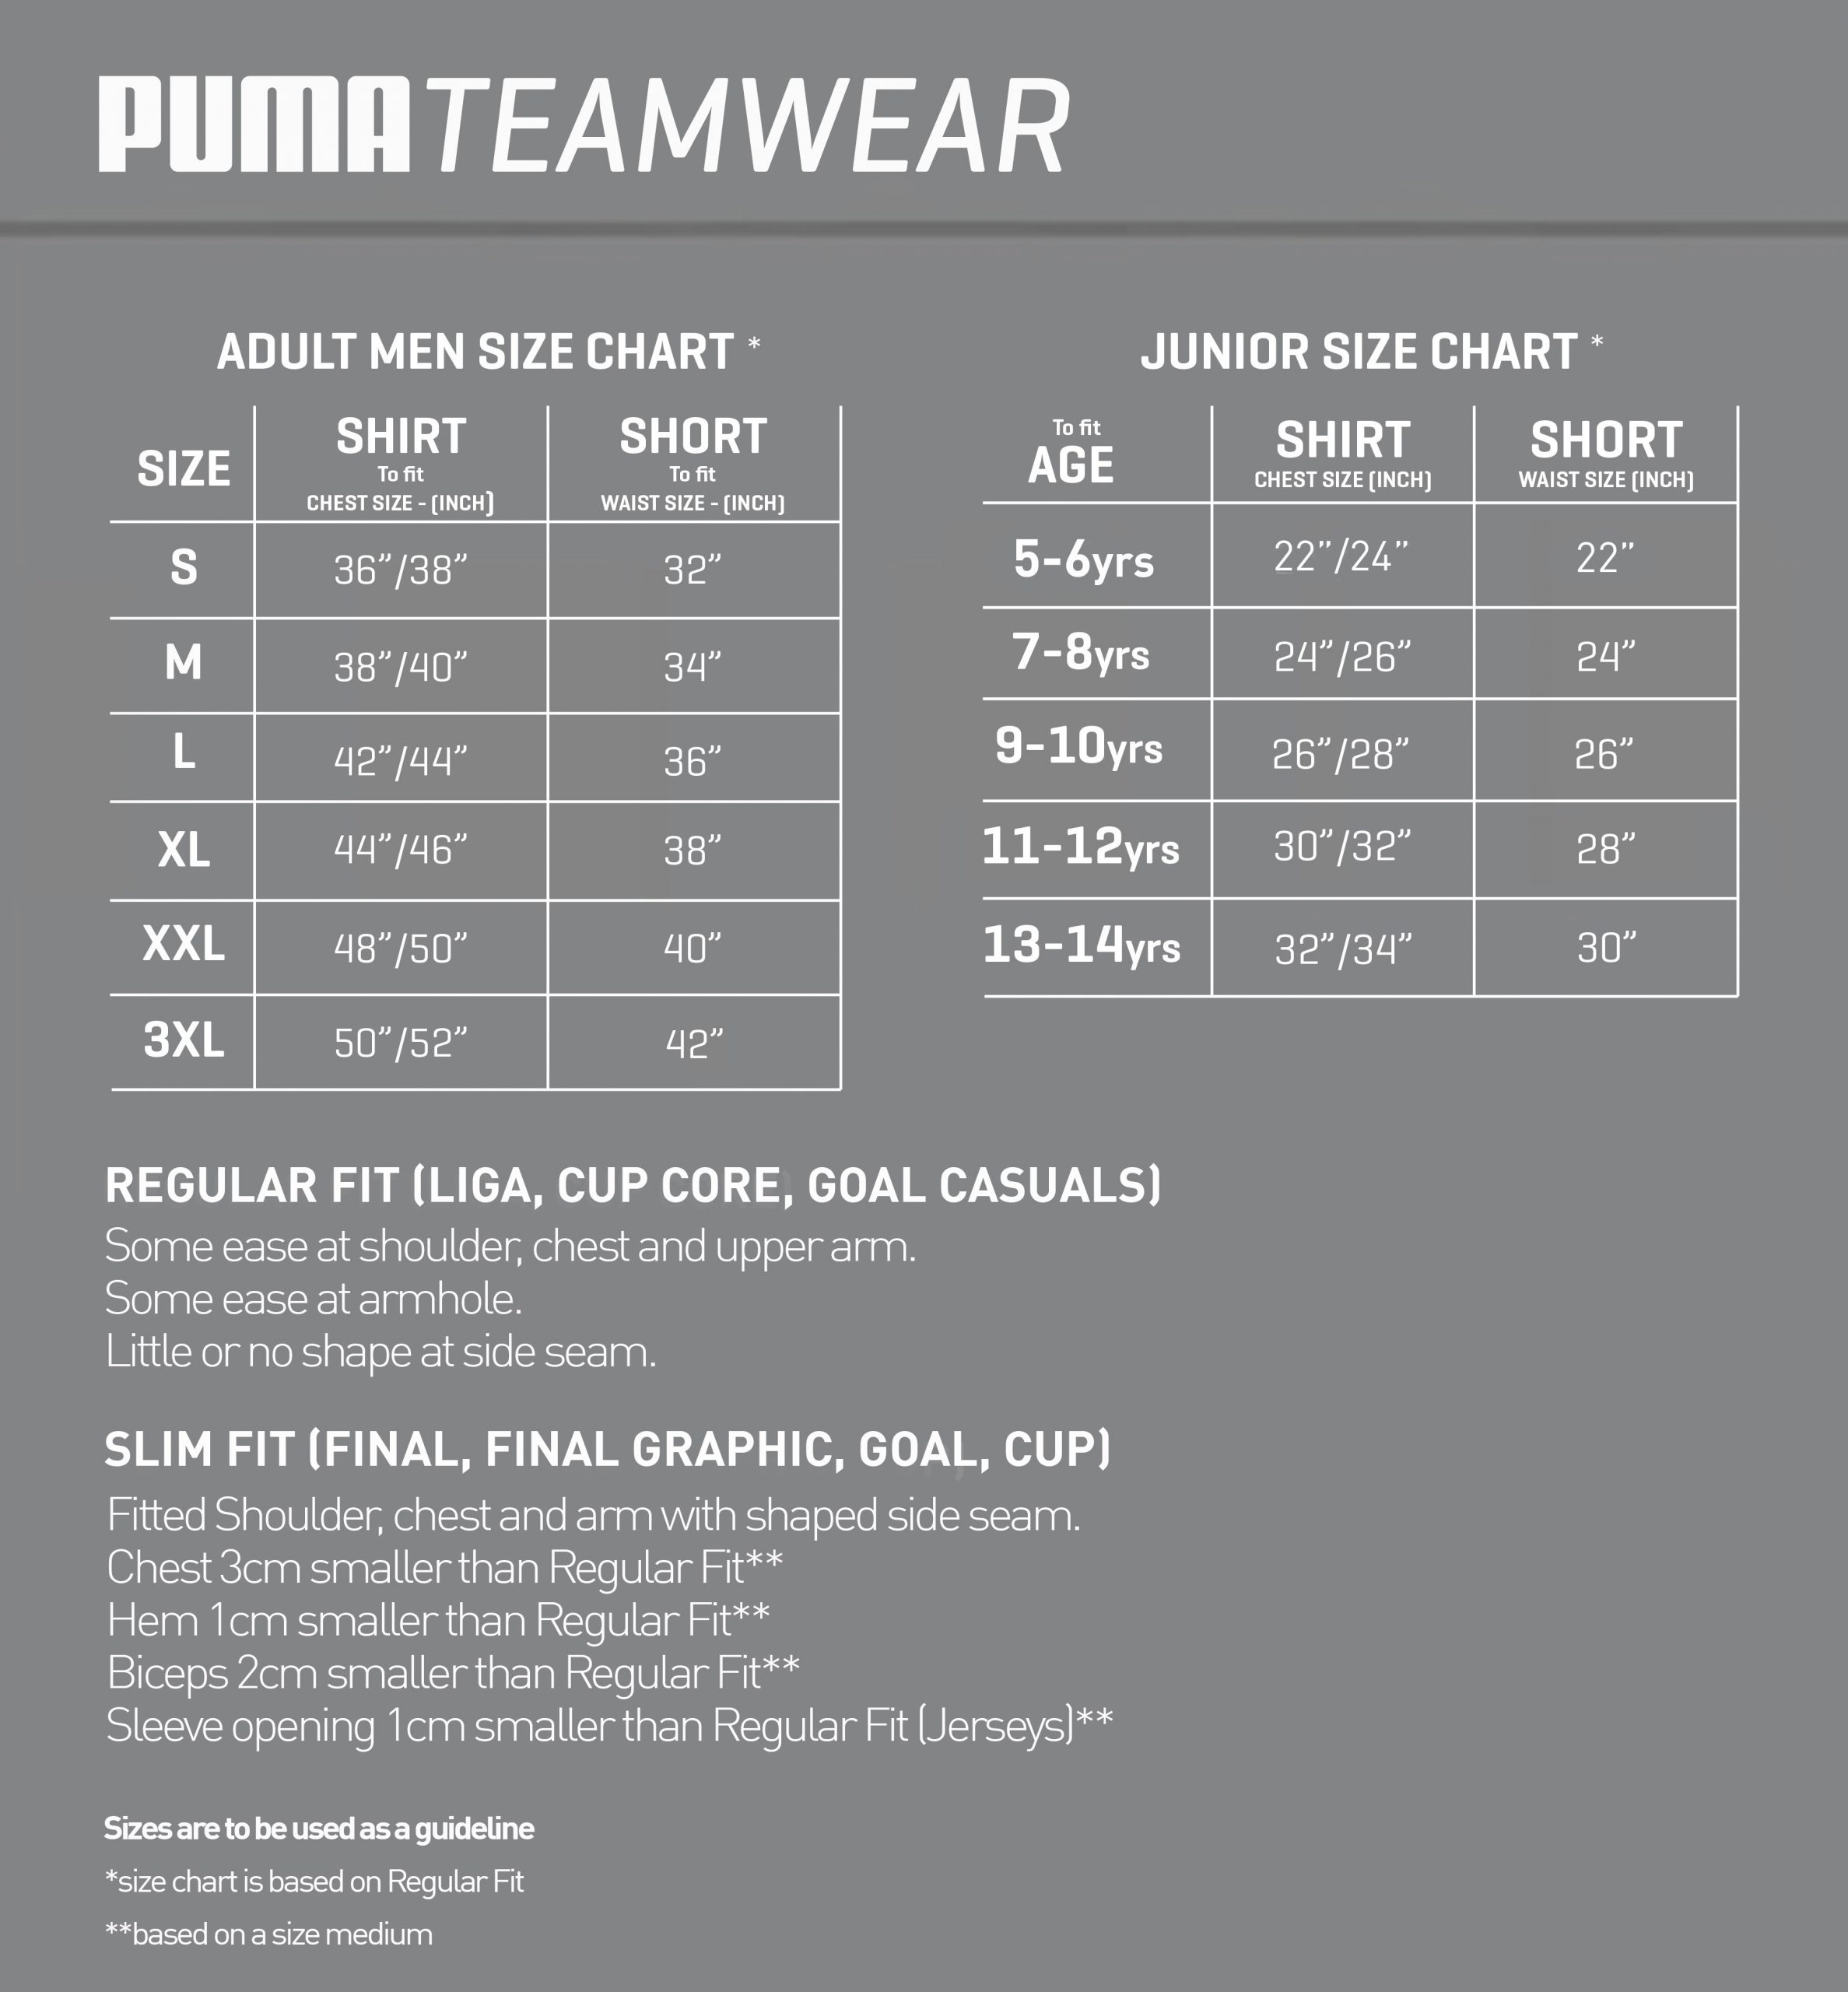 What size will I be? – Puma Teamwear